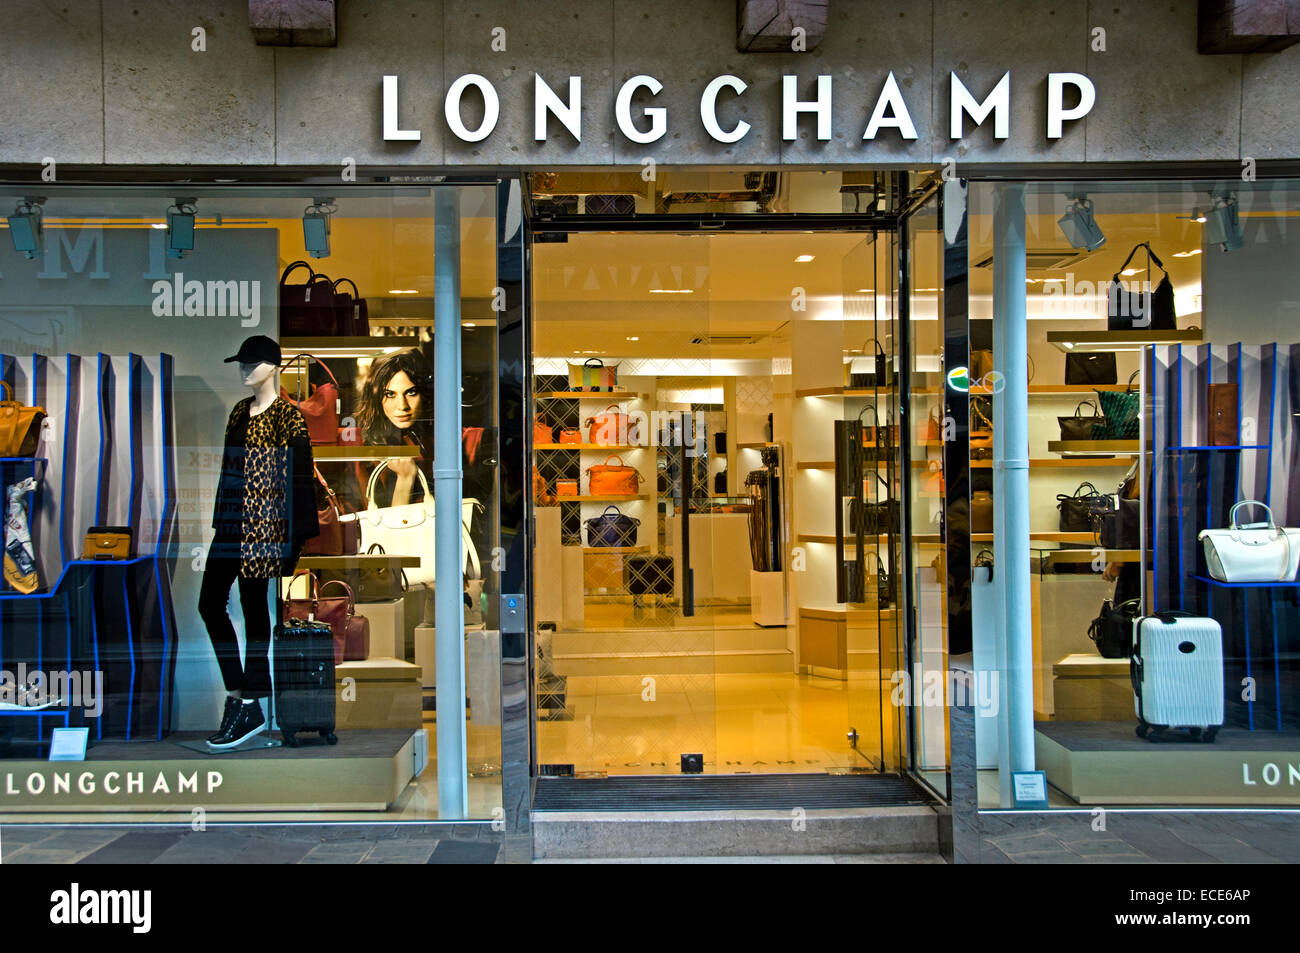 longchamp shops